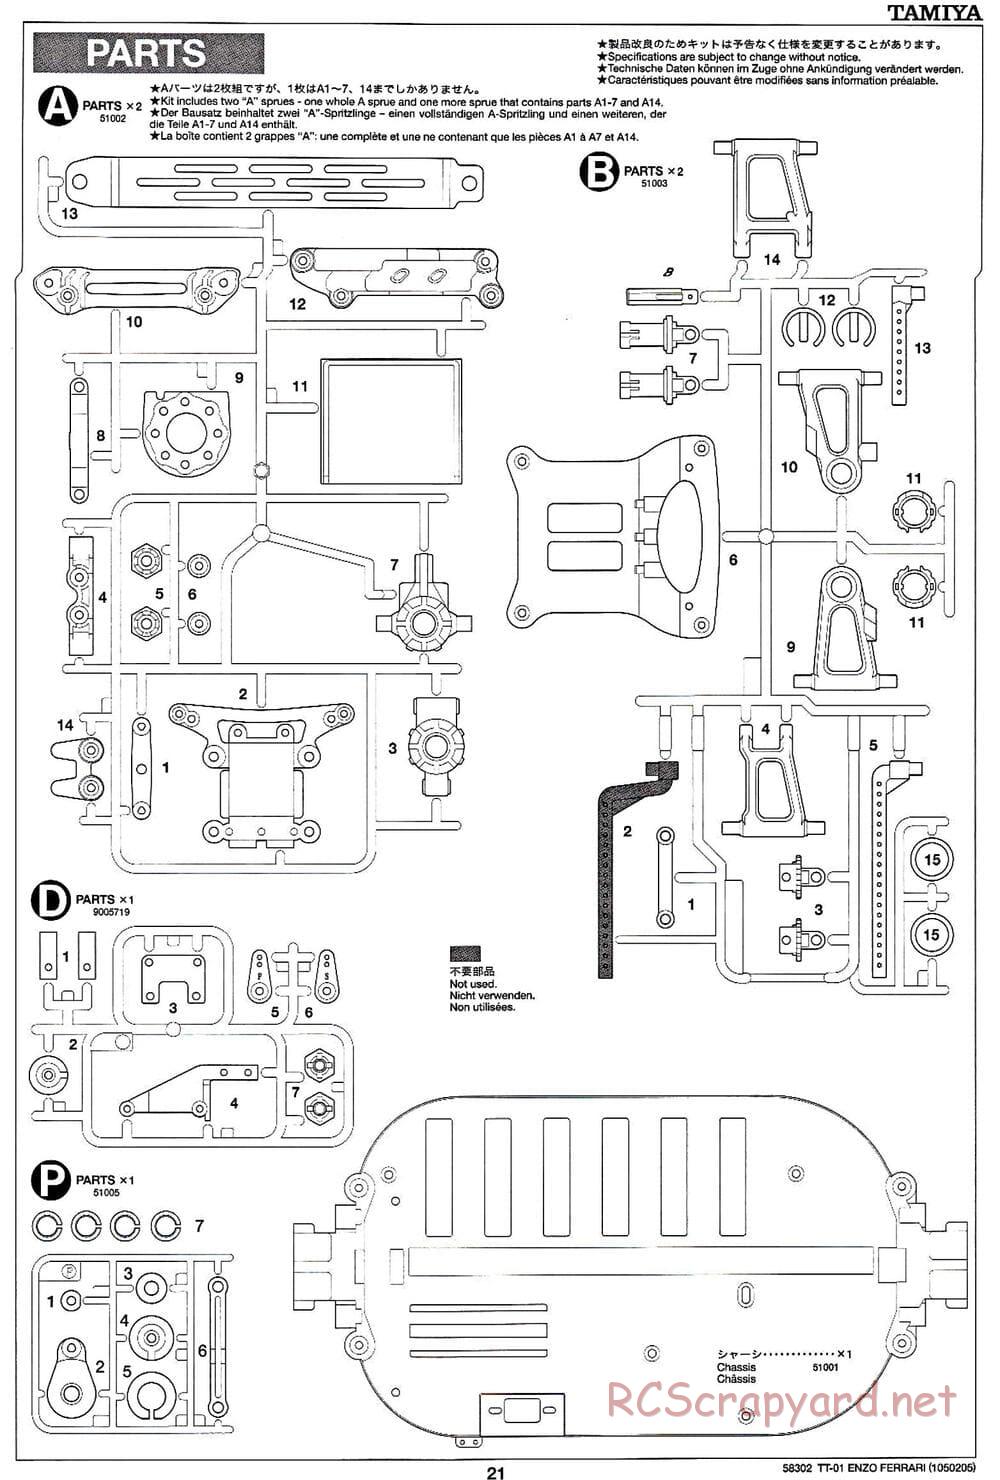 Tamiya - Enzo Ferrari - TT-01 Chassis - Manual - Page 21